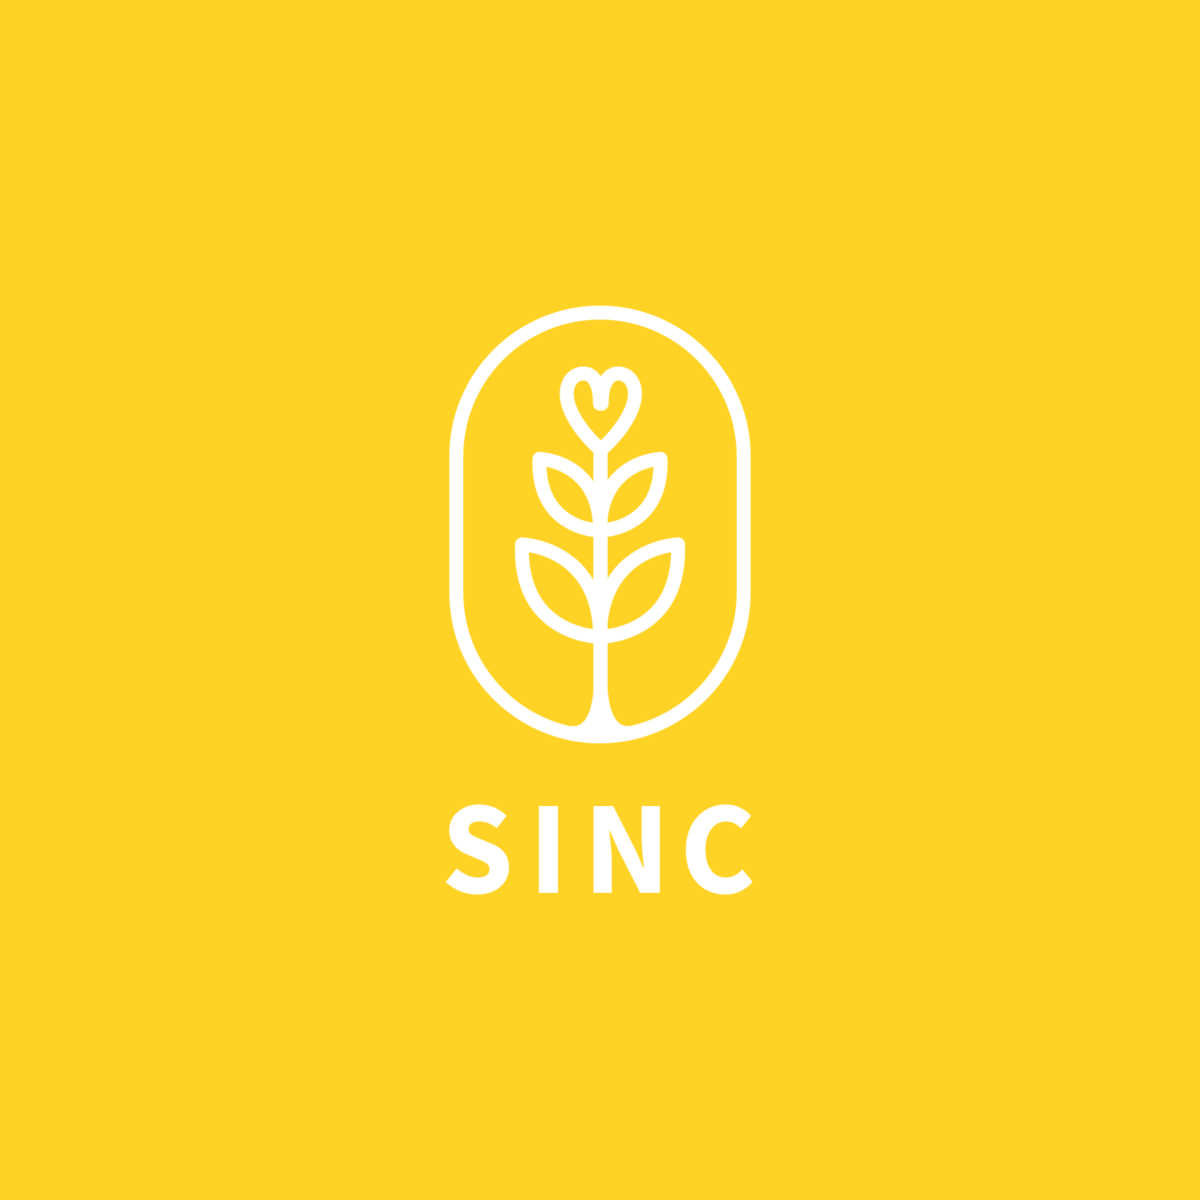 Introducing the SINC logo